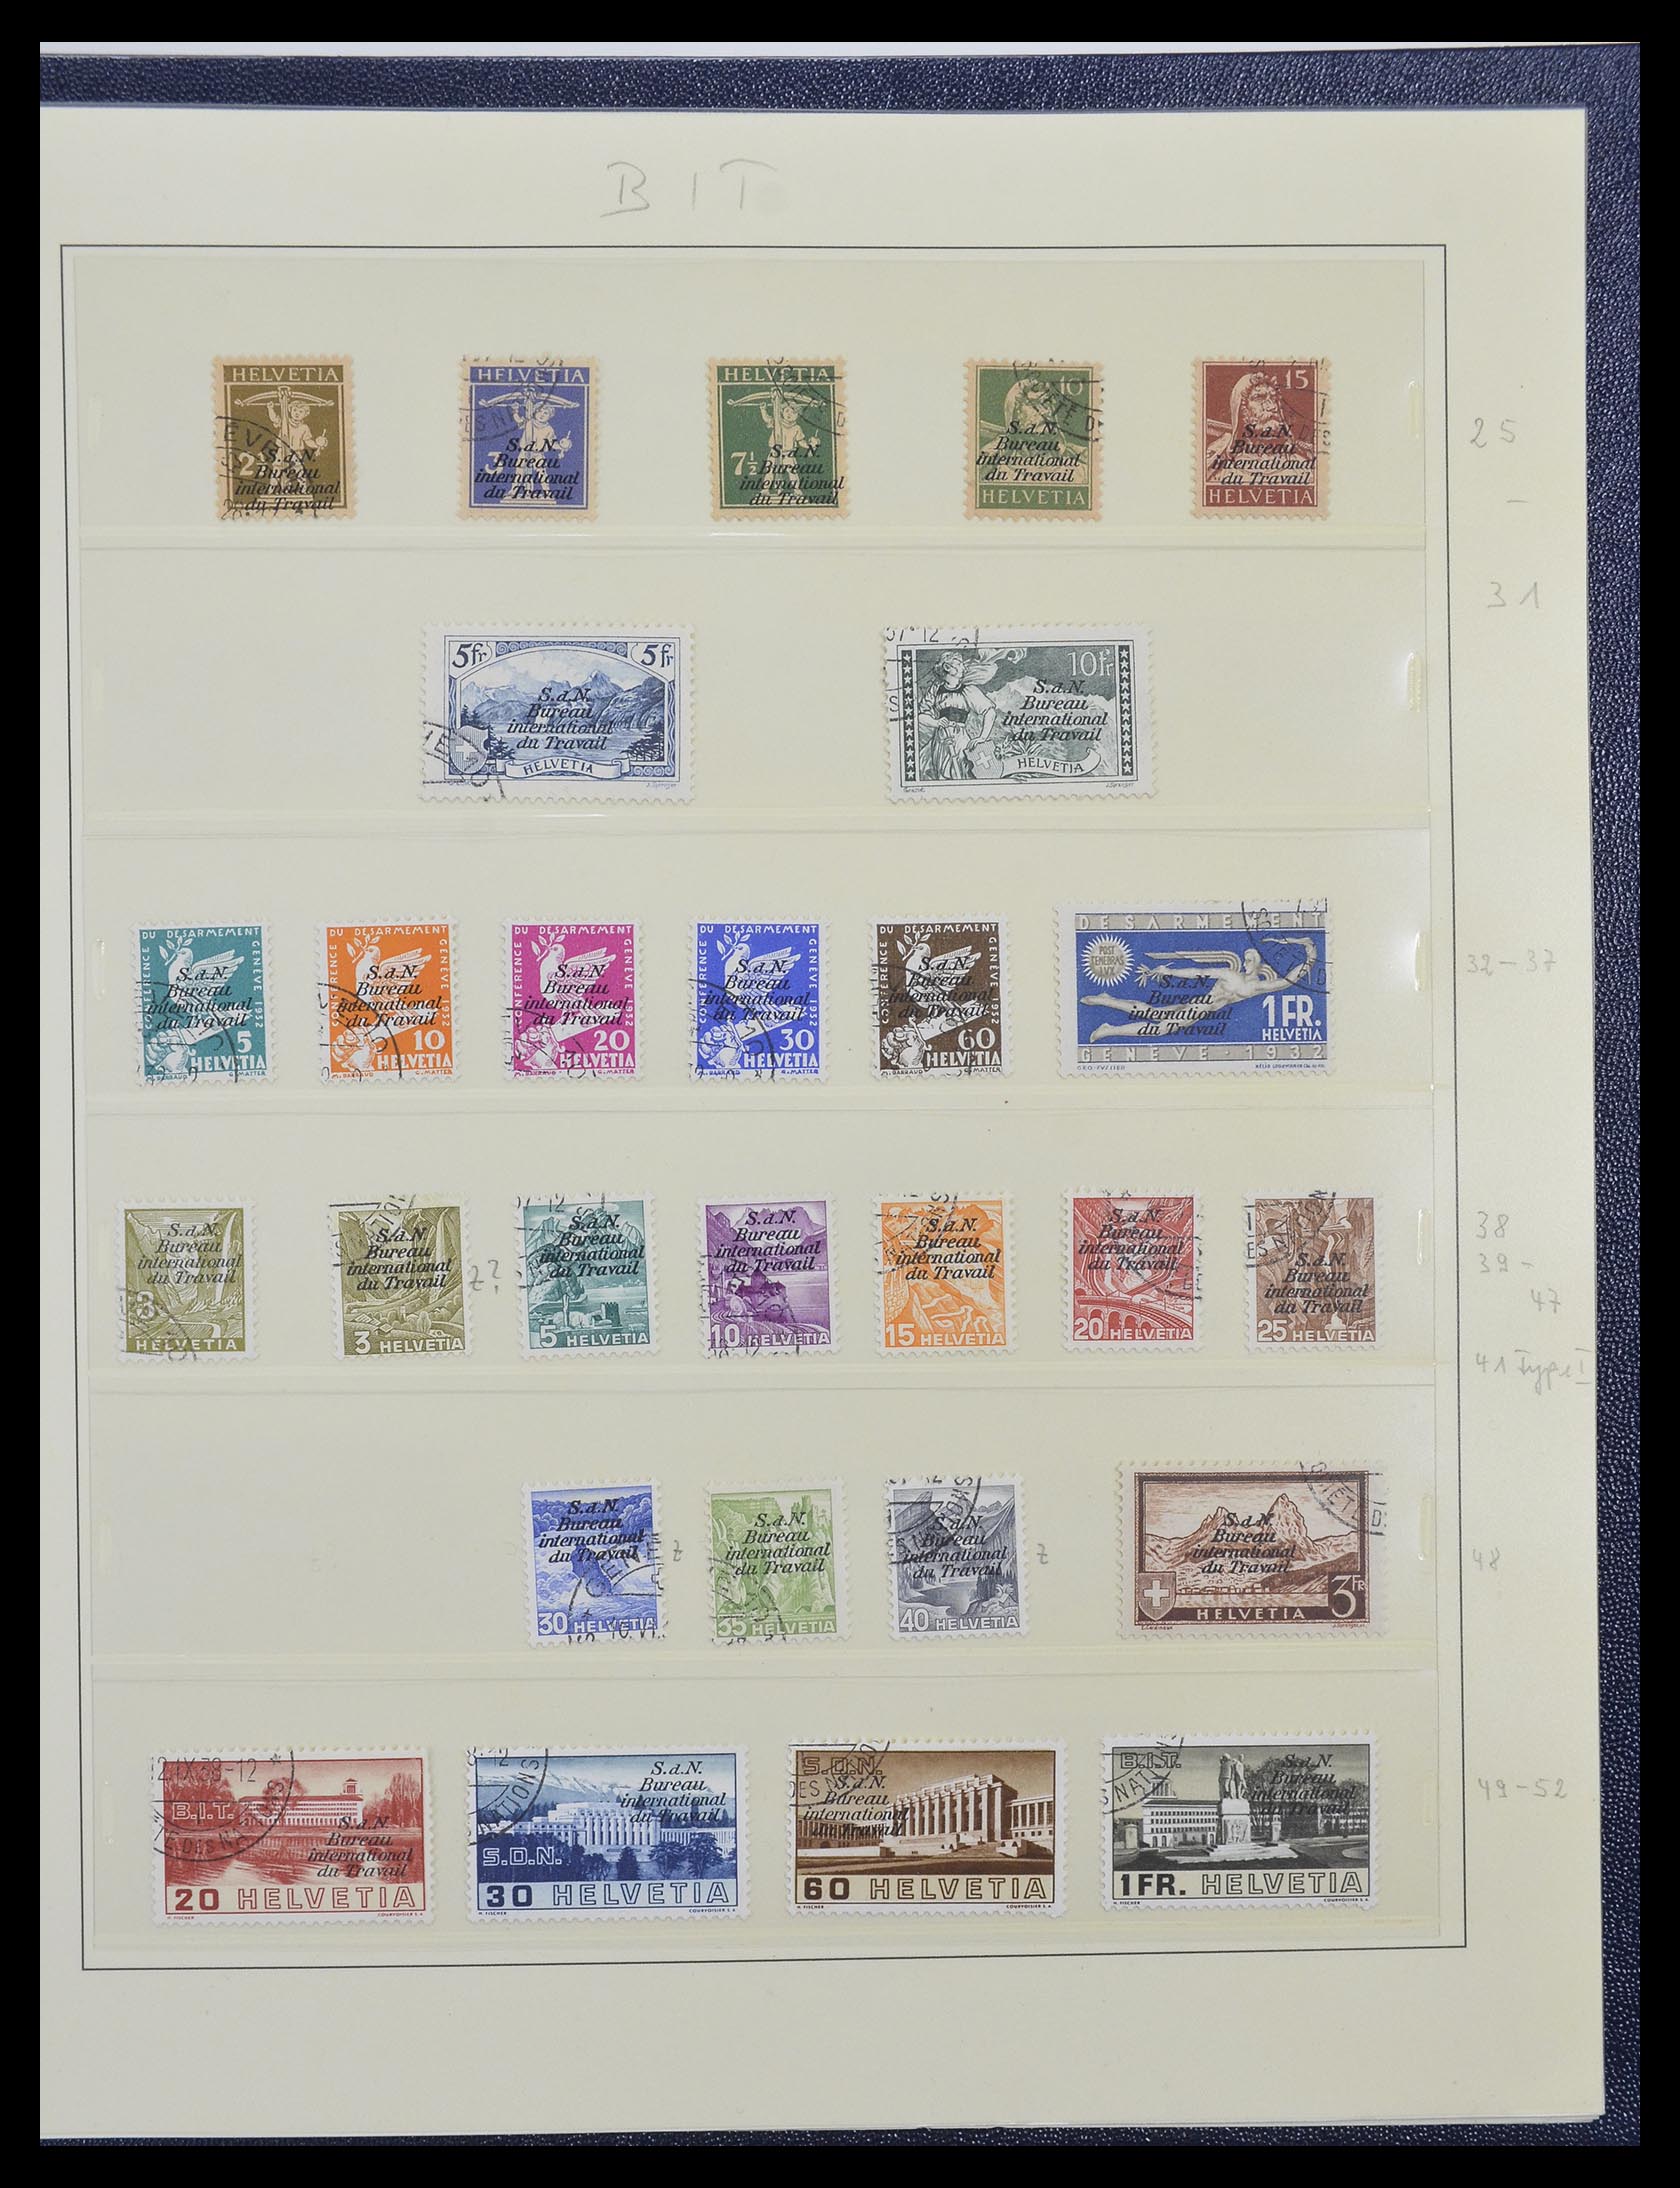 33137 009 - Stamp collection 33137 Switzerland service 1922-2008.